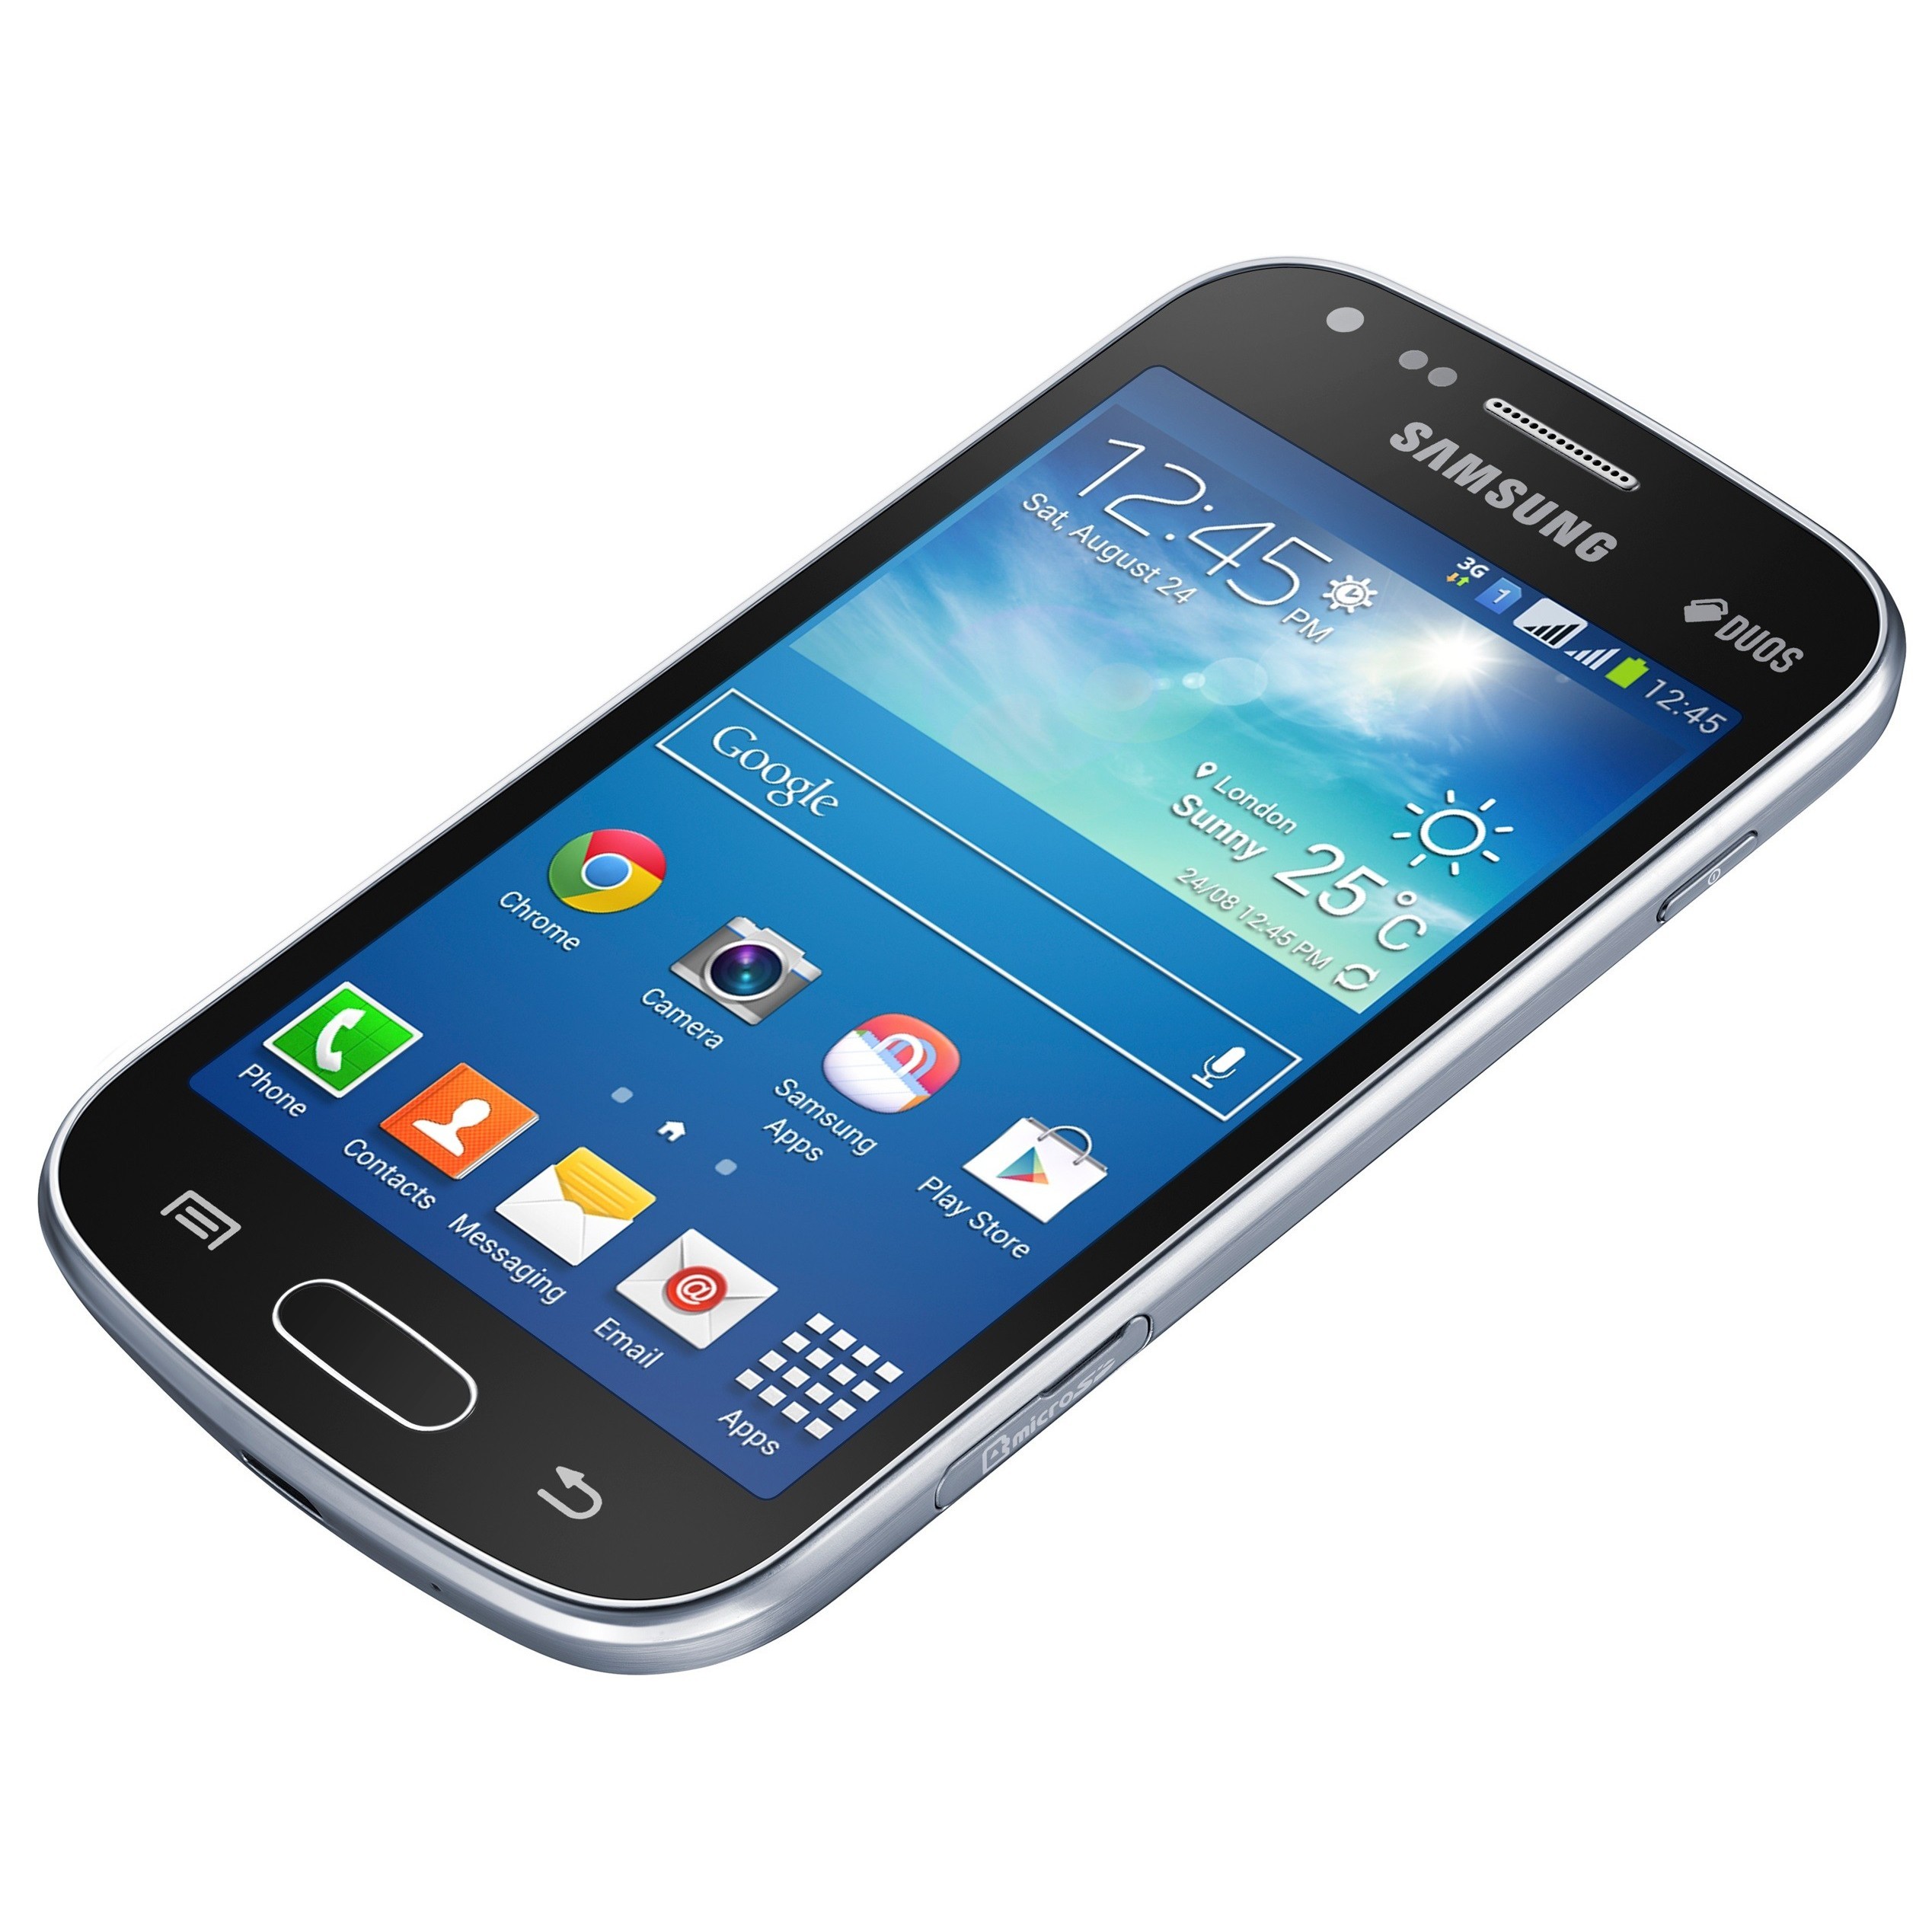 Samsung galaxy ташкент. Samsung s7580 Galaxy trend Plus. Samsung Galaxy s Duos 2 gt-s7582. Samsung Galaxy trend Plus gt-s7580. Samsung Duos gt s7582.